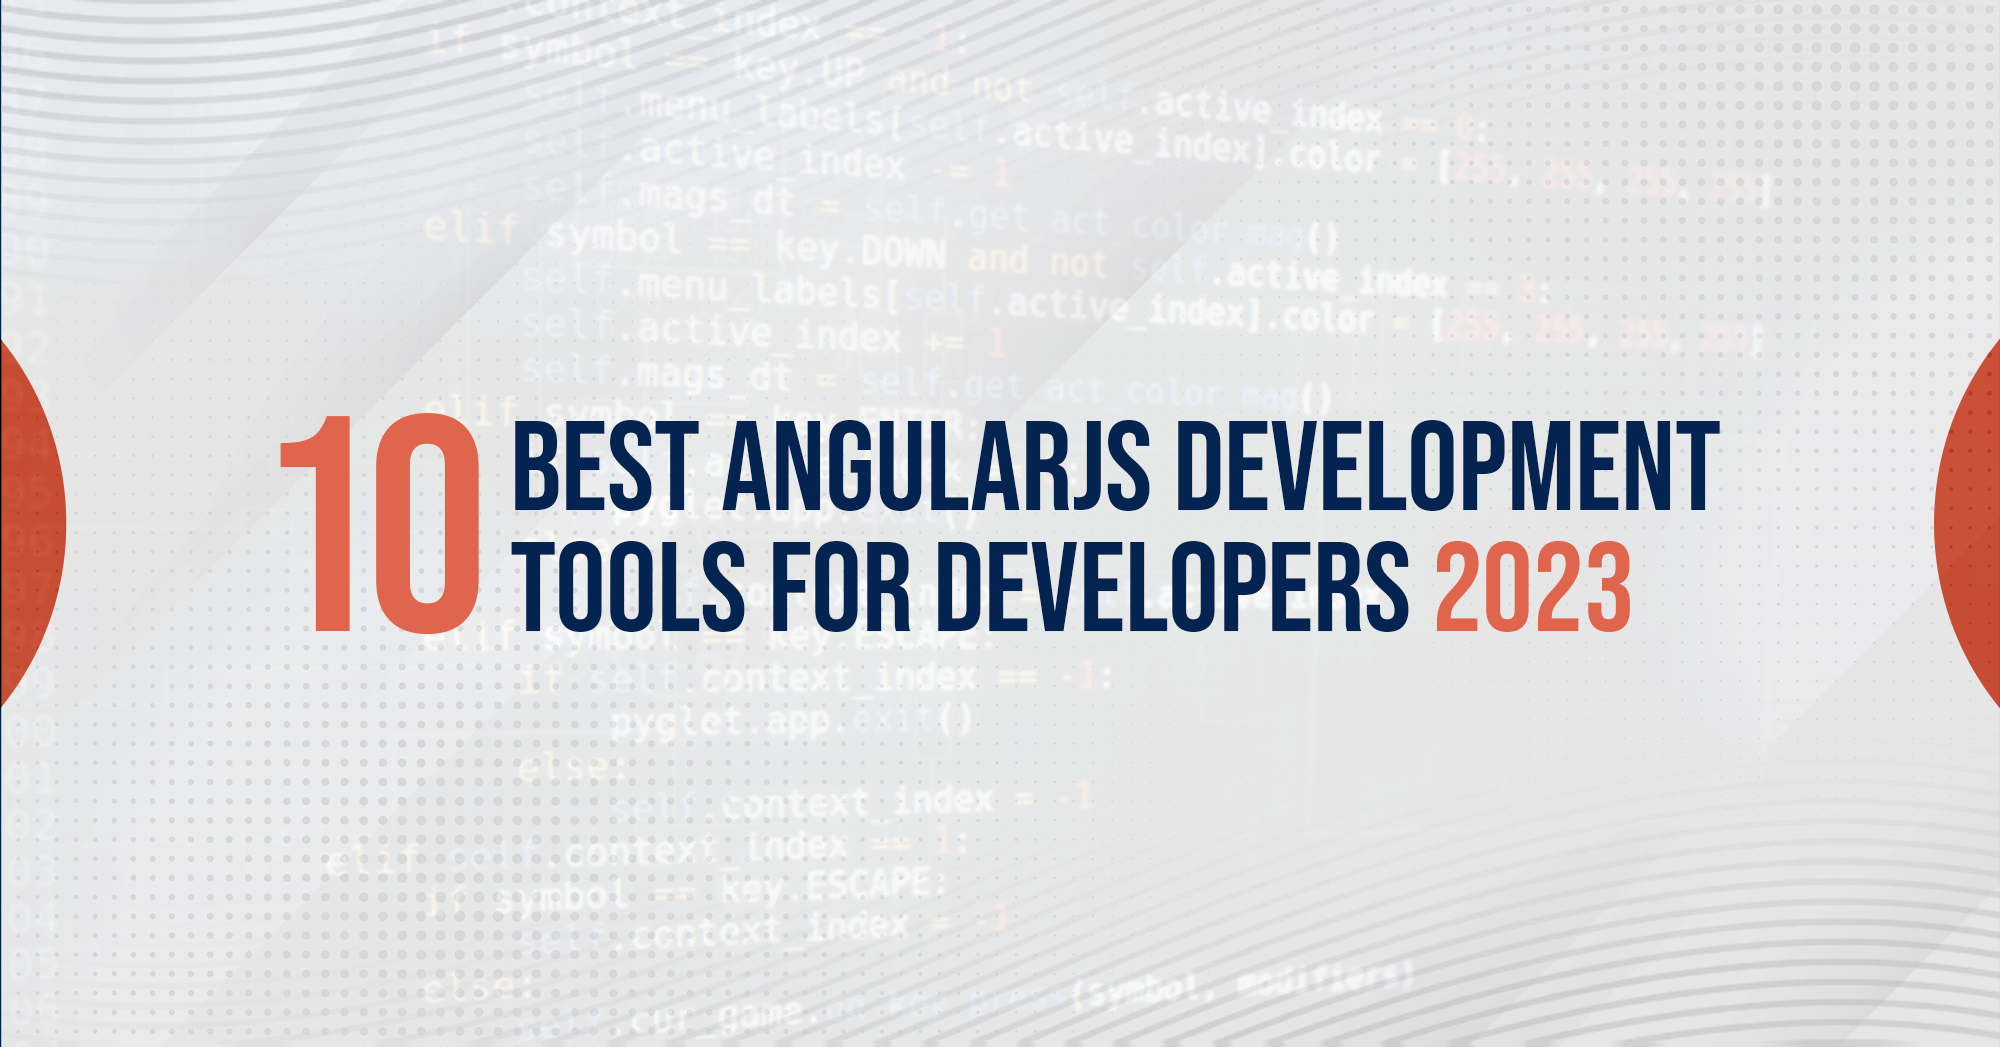 AngularJS Development Tools